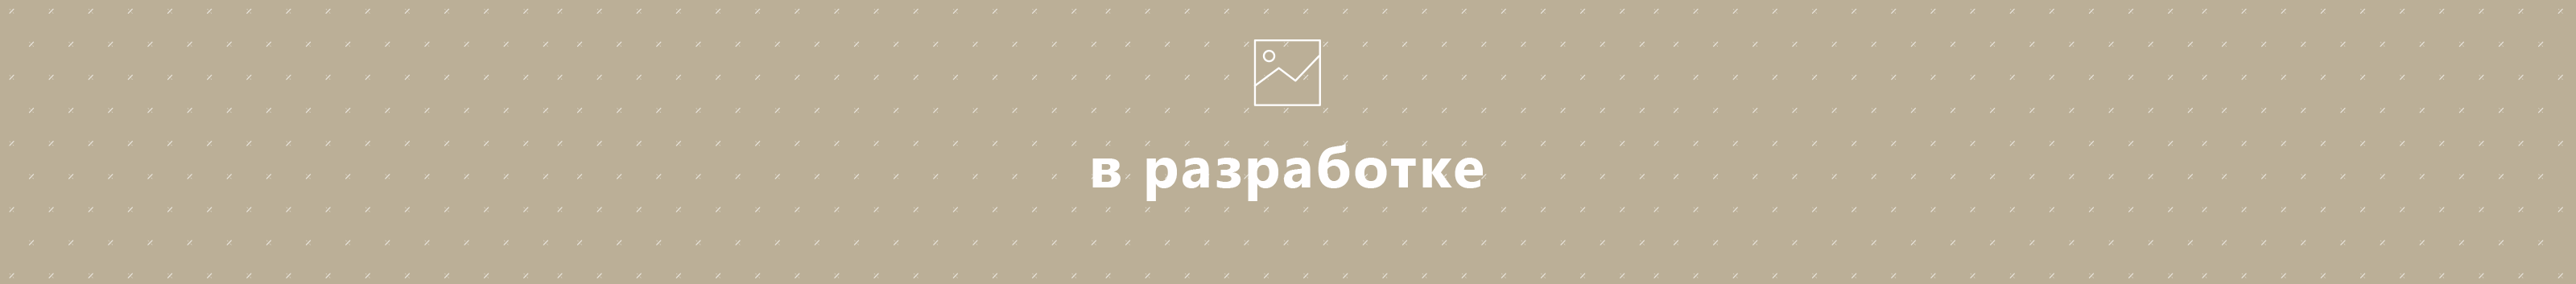 Bannière de profil de Evgeny Popov